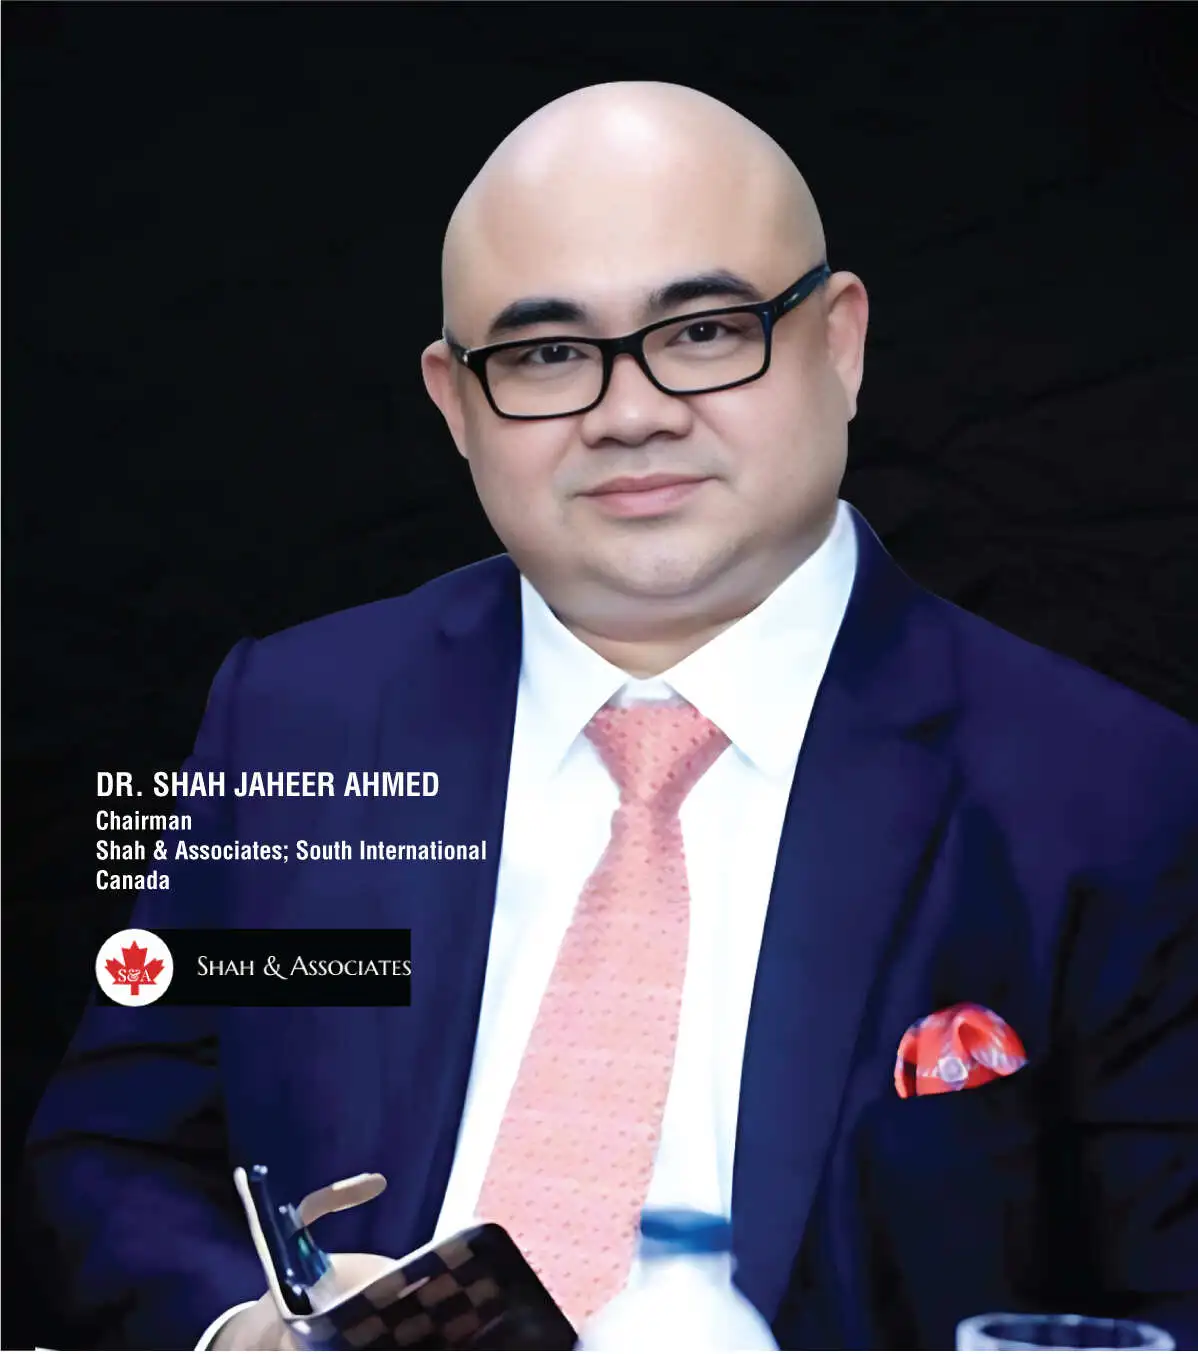 Dr. Shah Jaheer Ahmed